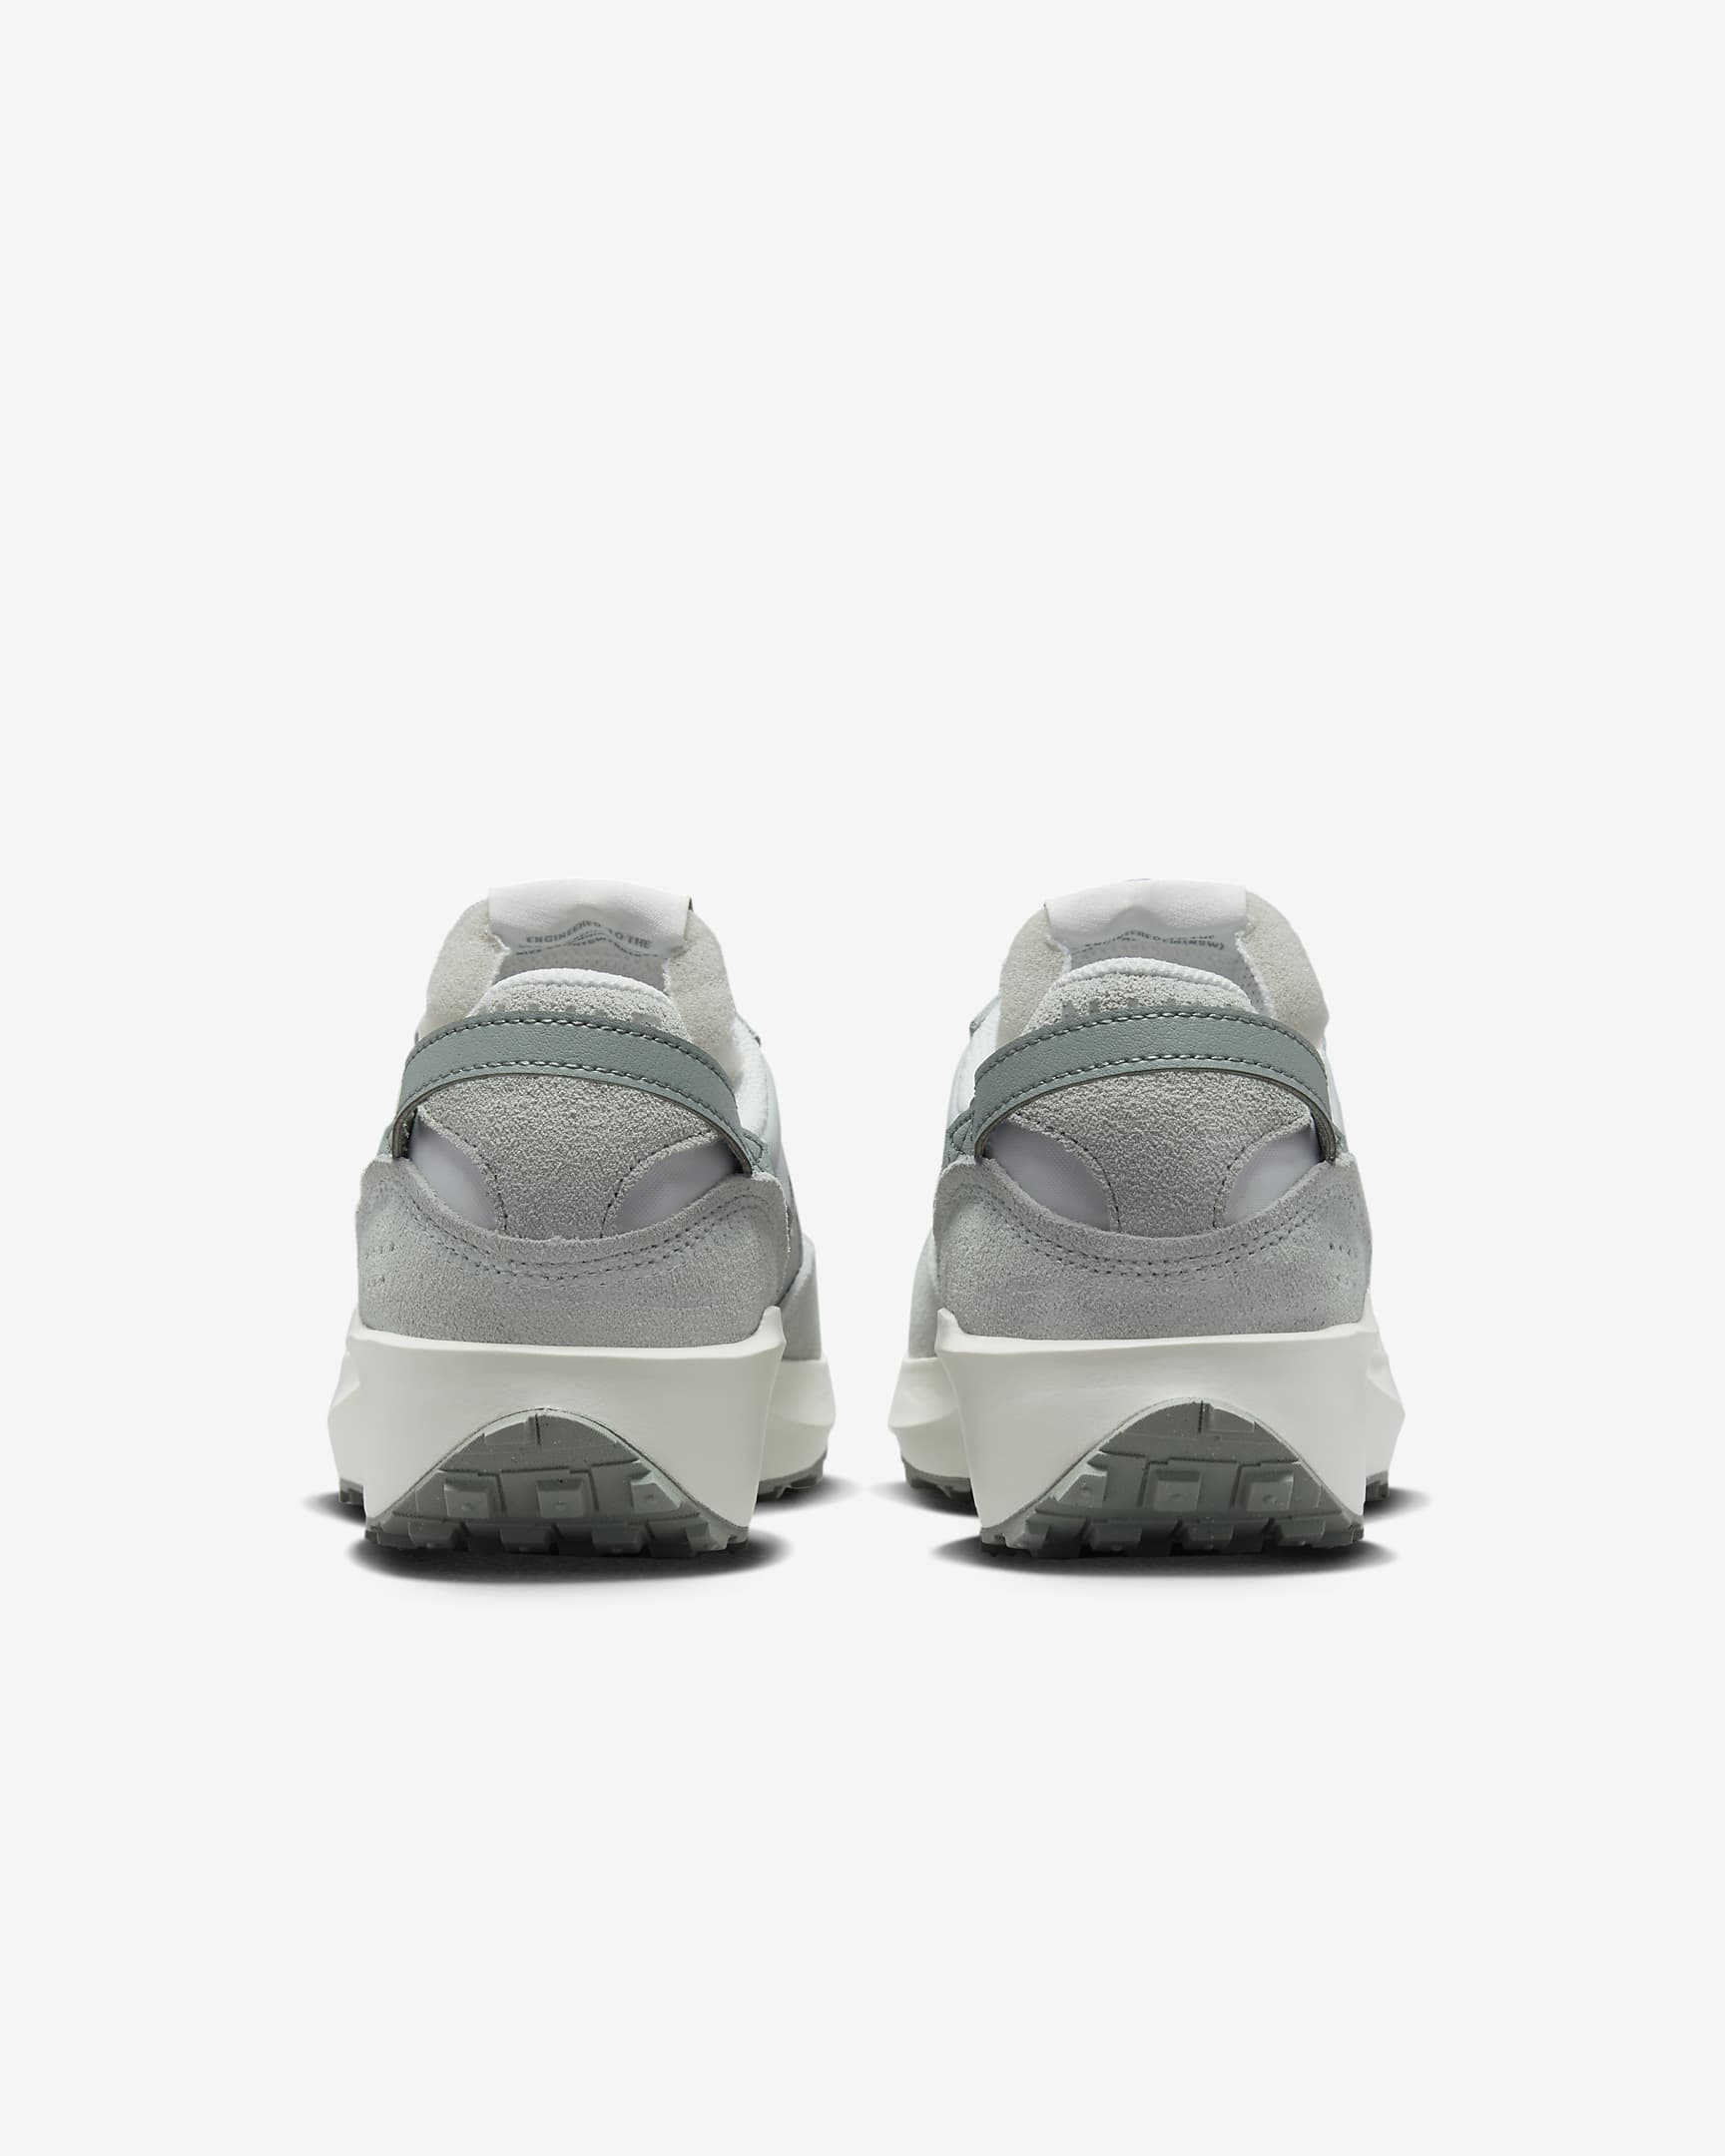 Nike Waffle Debut Women's Shoes - Summit White/Light Silver/Mica Green